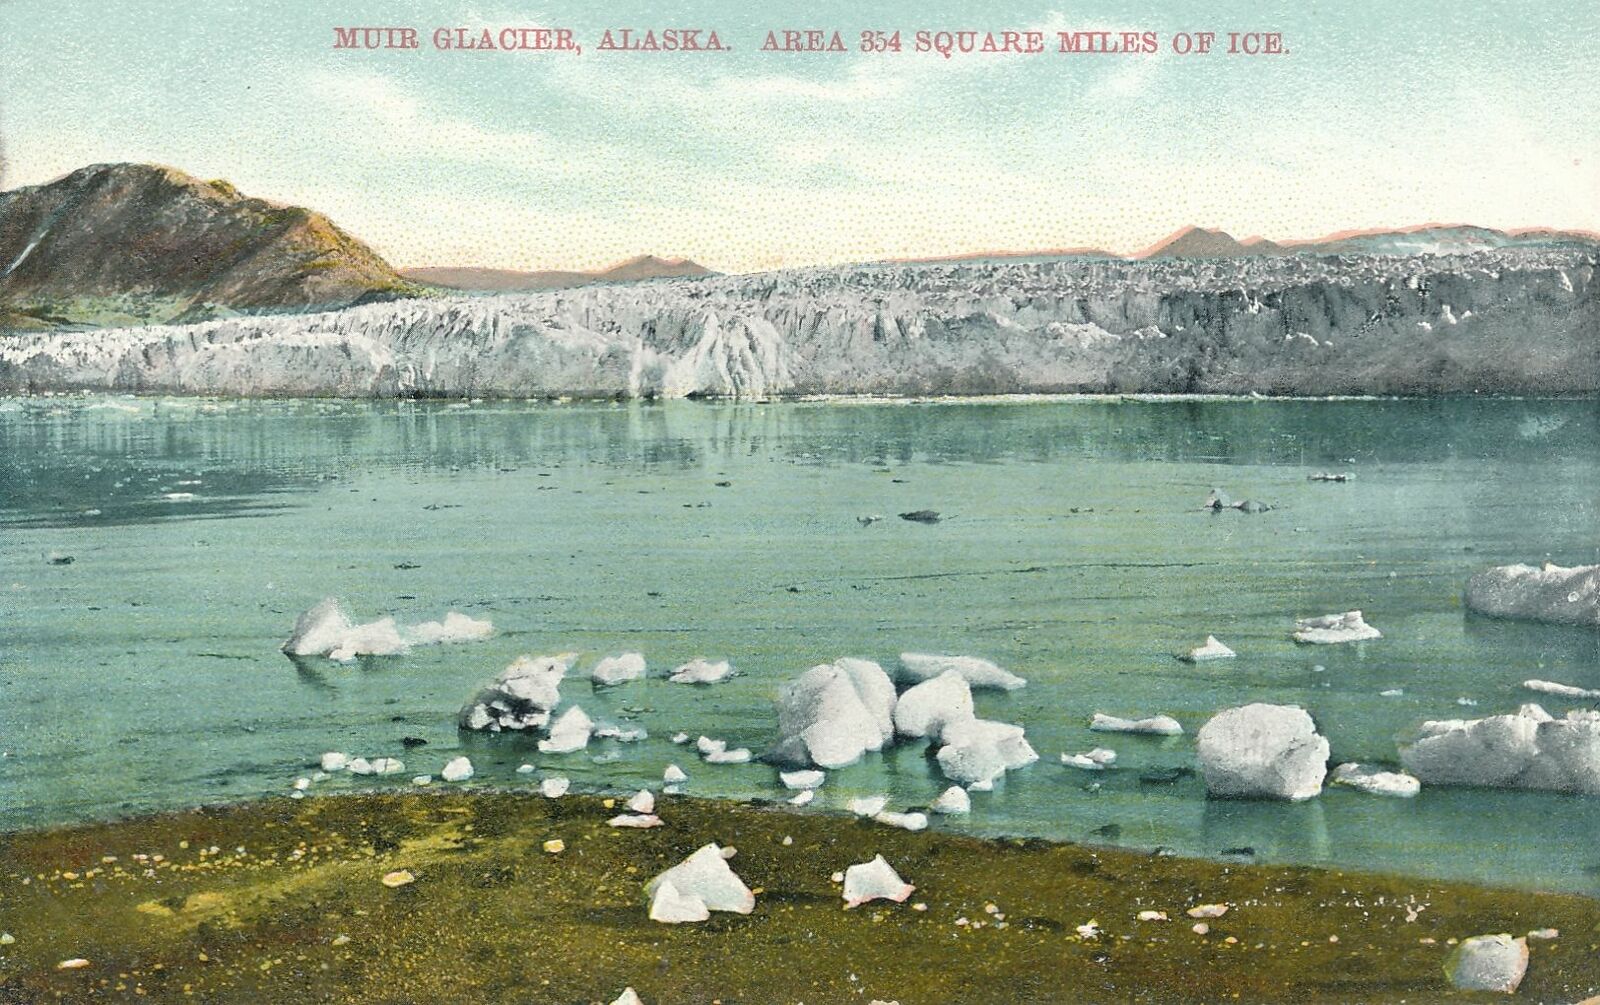 ALASKA AK - Muir Glacier (Area 354 Square Miles of Ice)